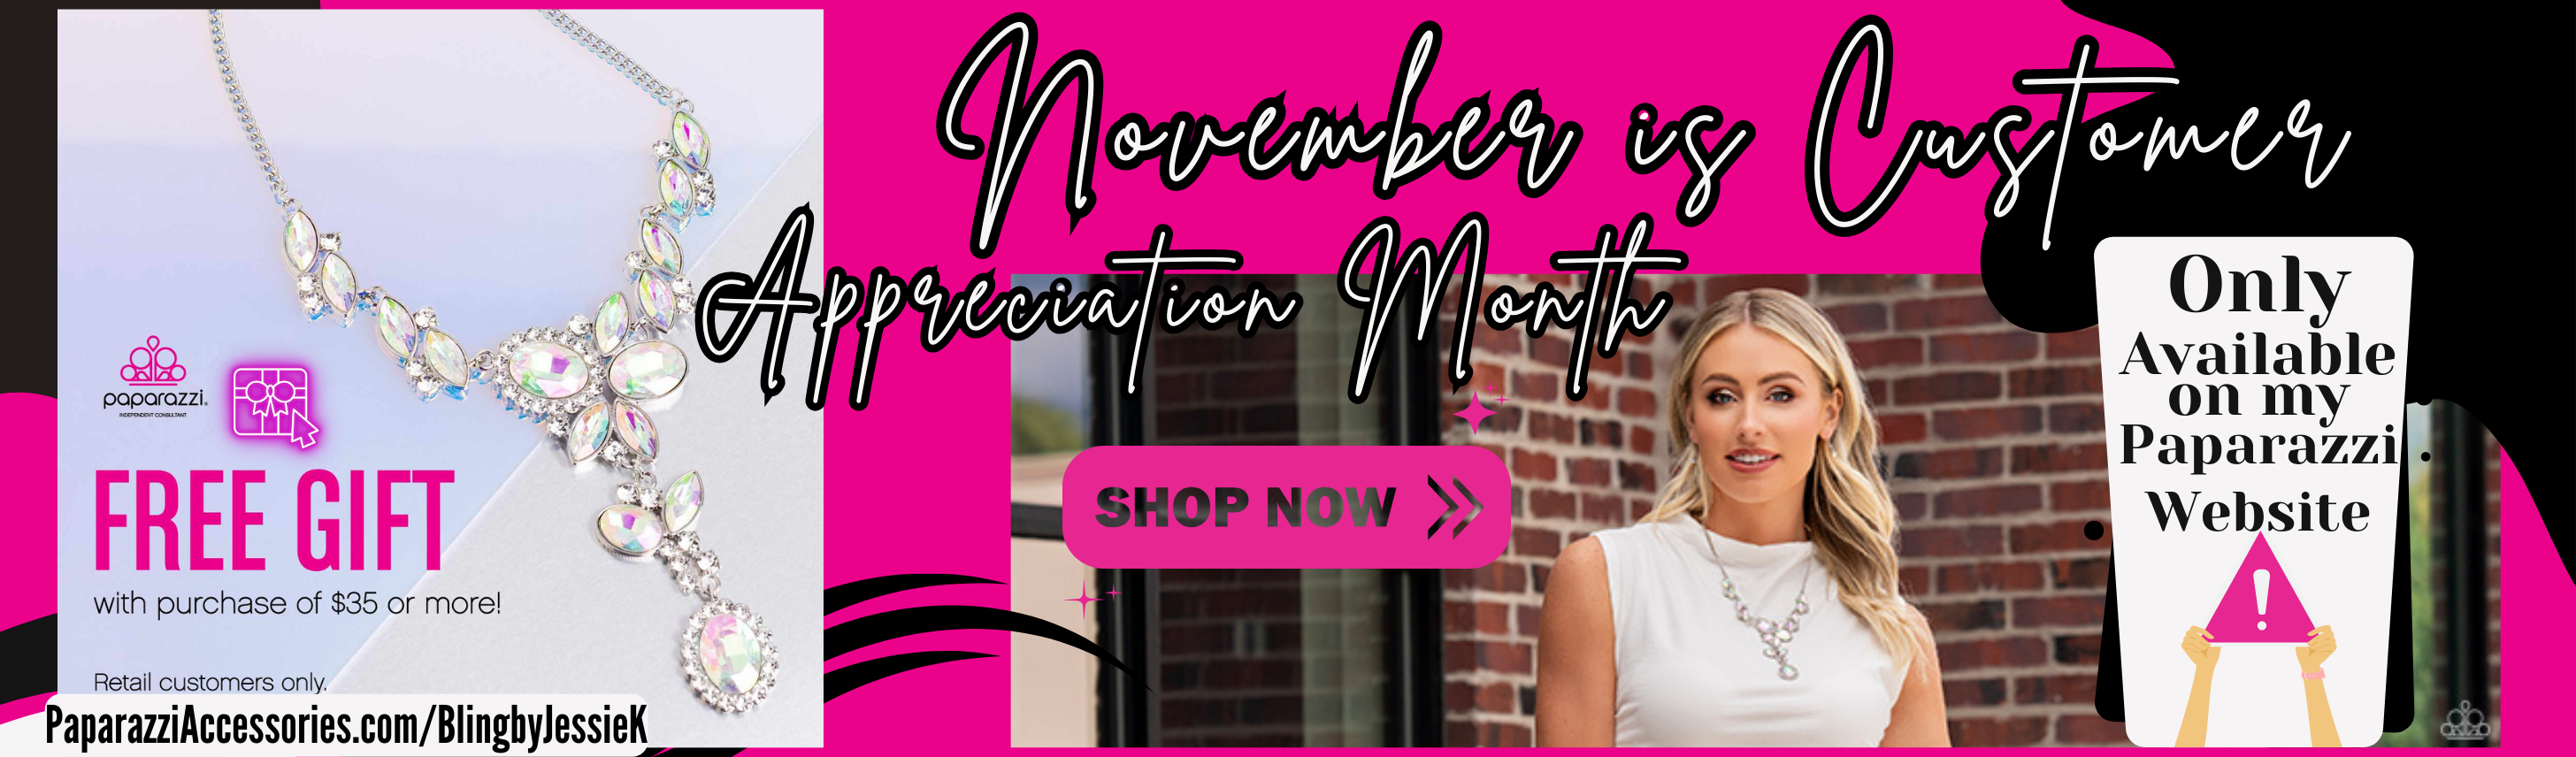 Paparazzi Accessories Customer Appreciation Month Free Necklace Shop Jessie Knowles 